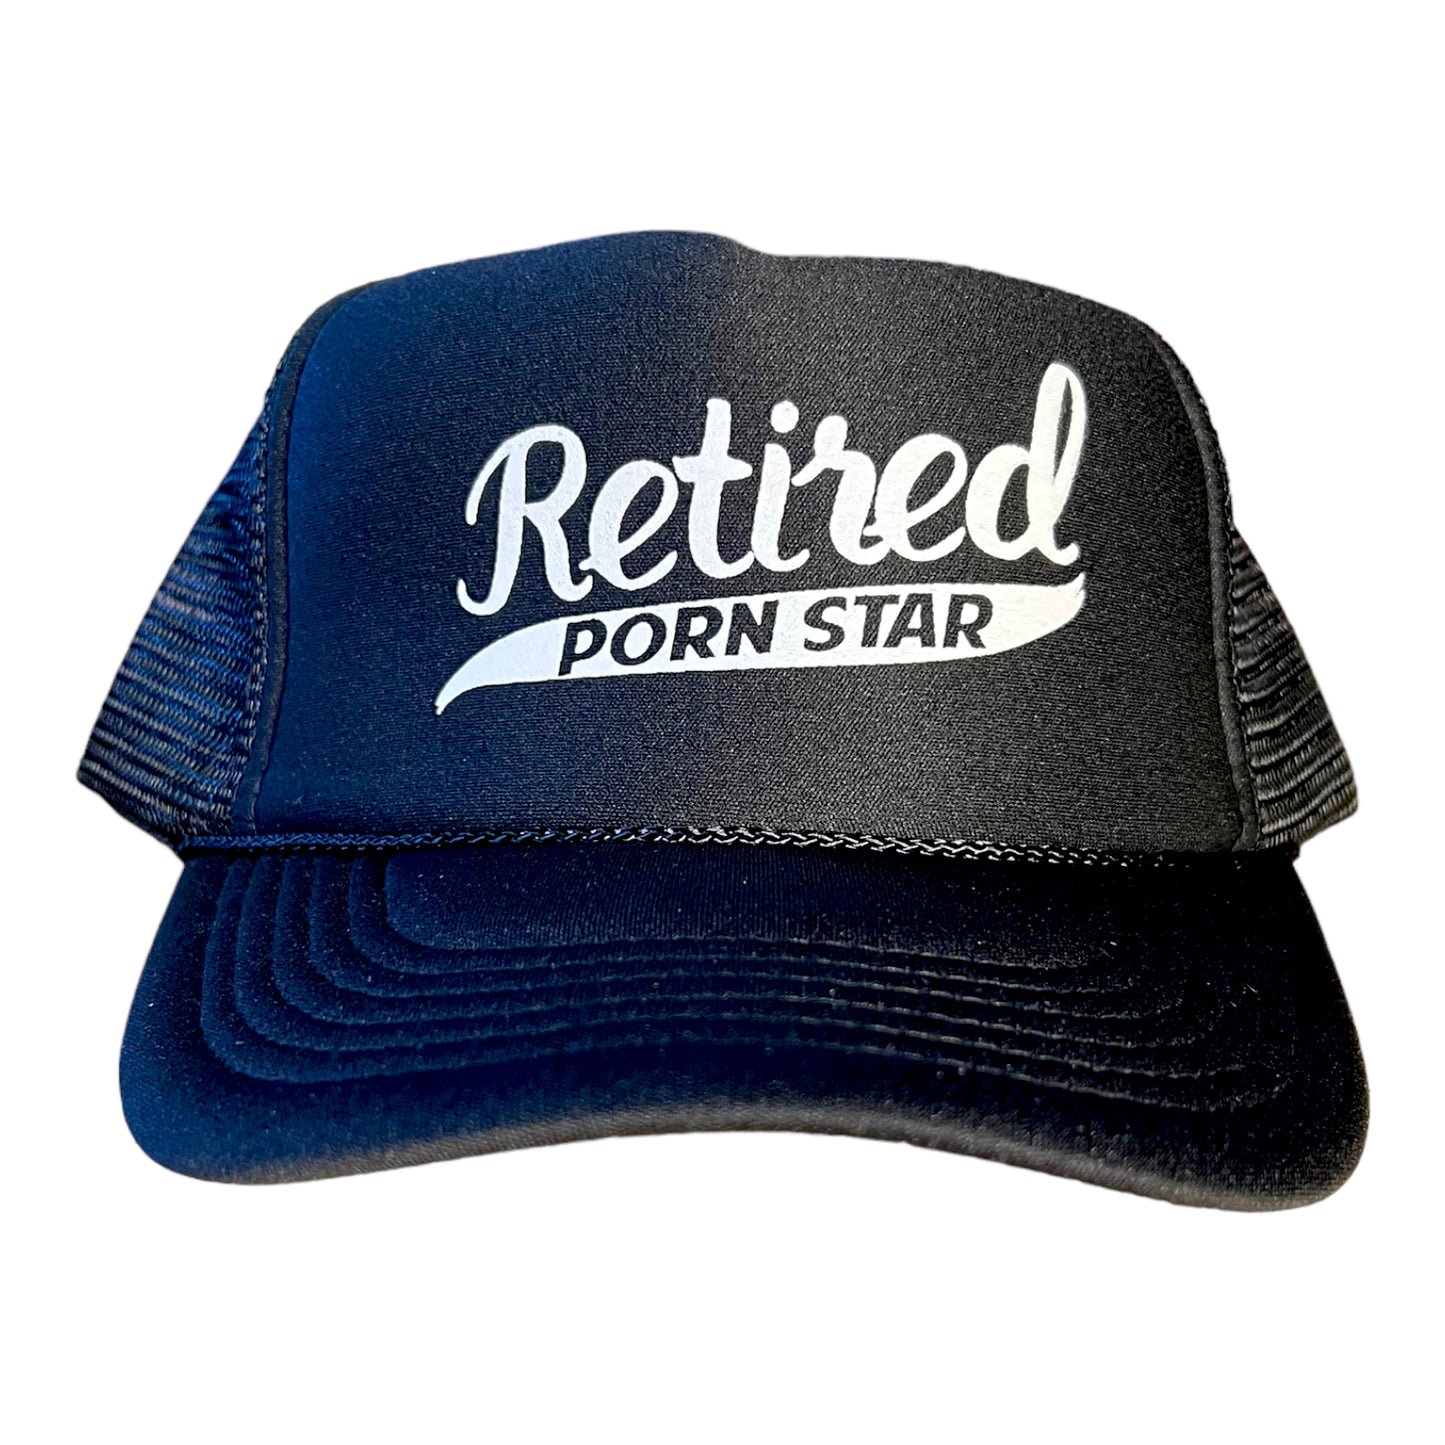 Retired Porn Star Trucker Hat Funny Trucker Hat Black.